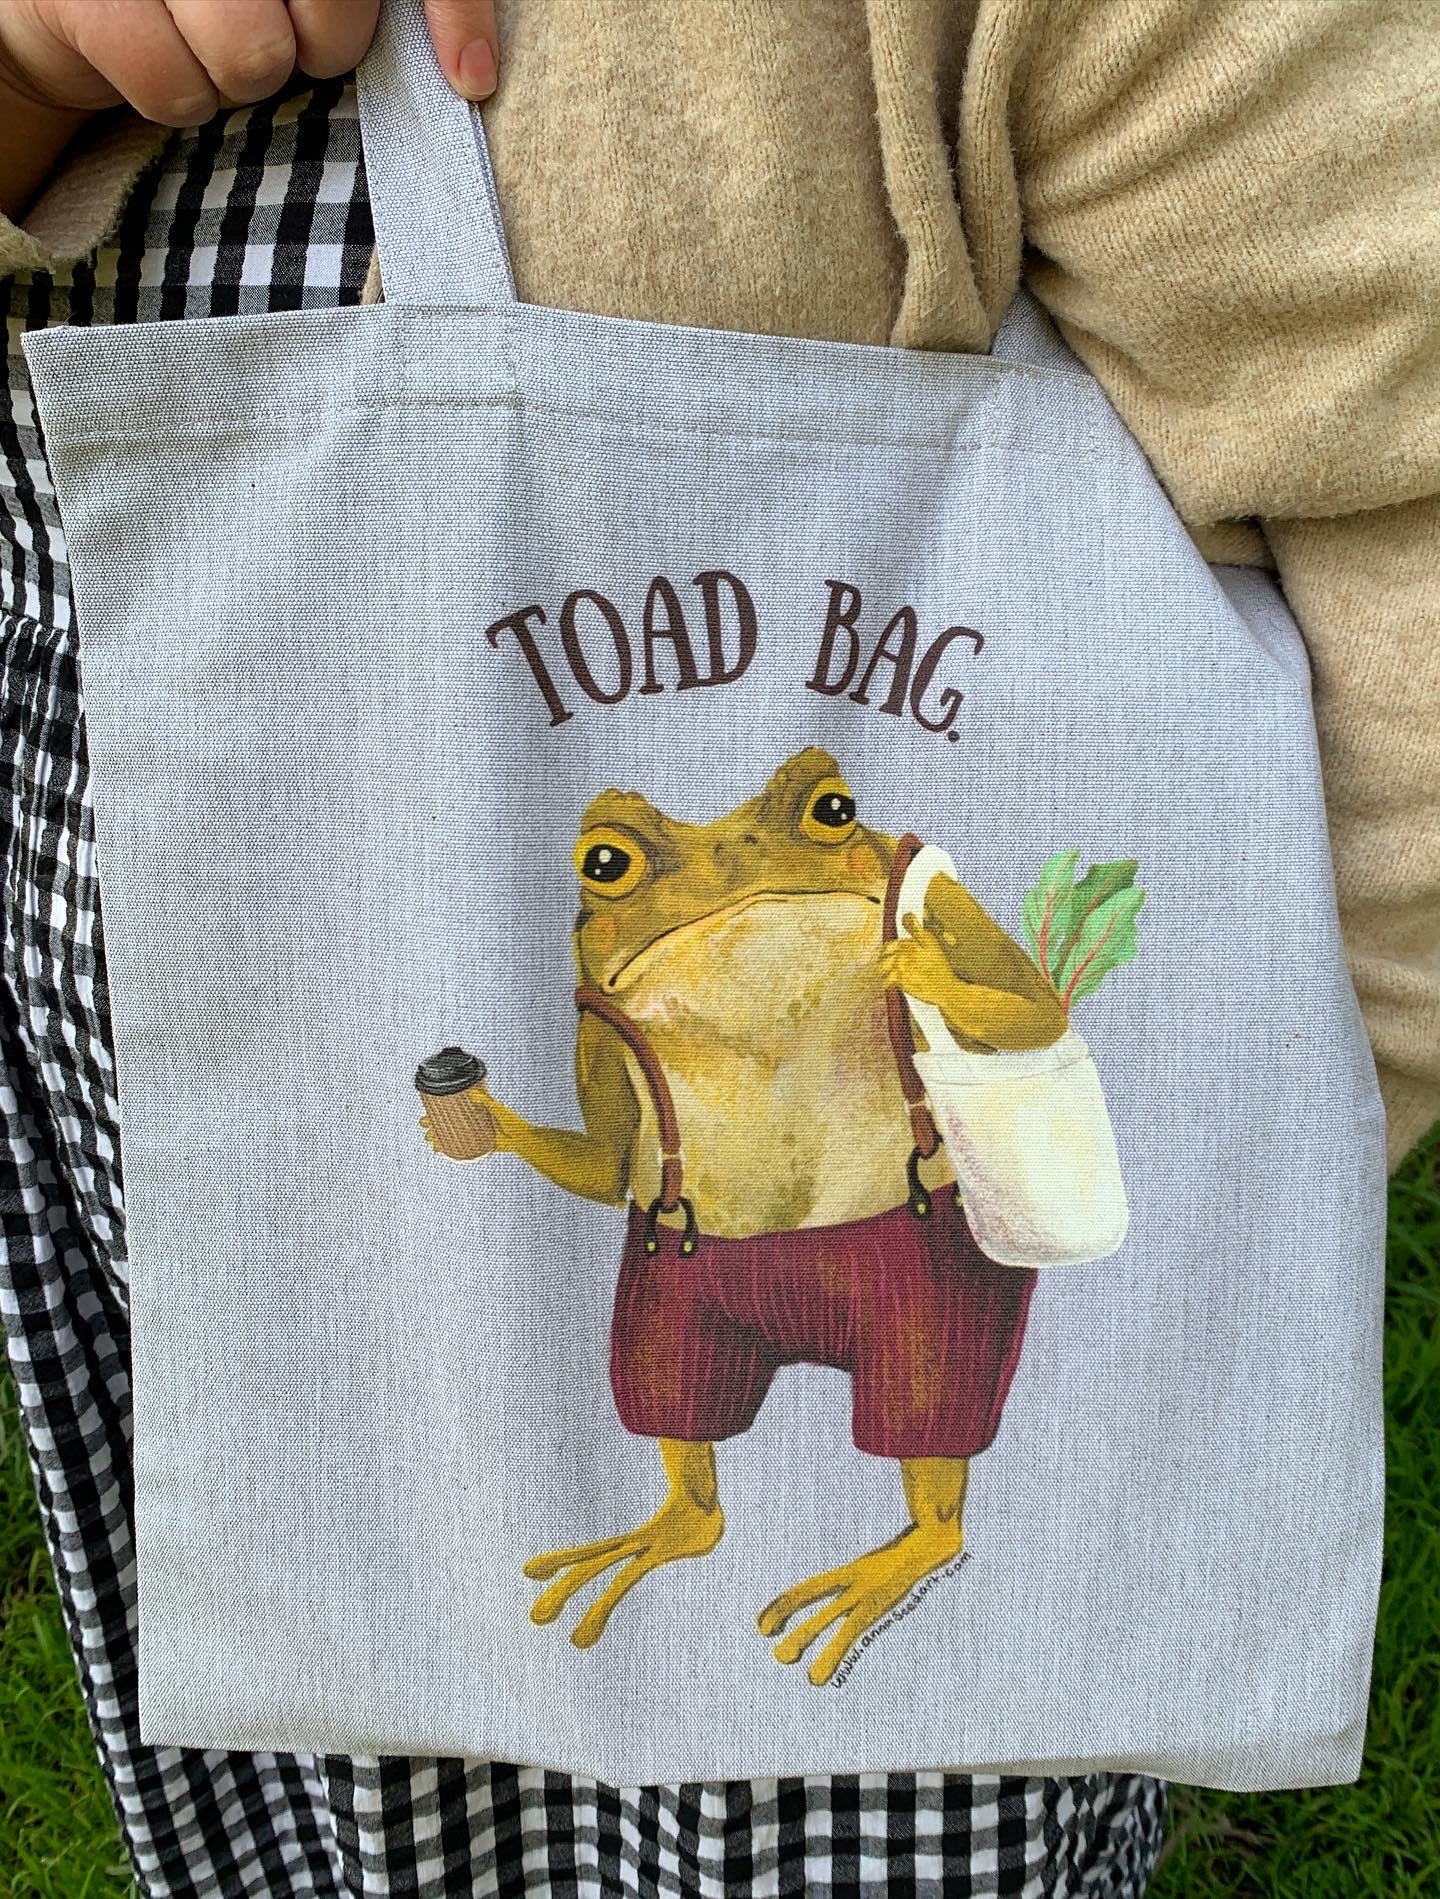 "Toad" Bag - Fun illustrated 100% cotton tote